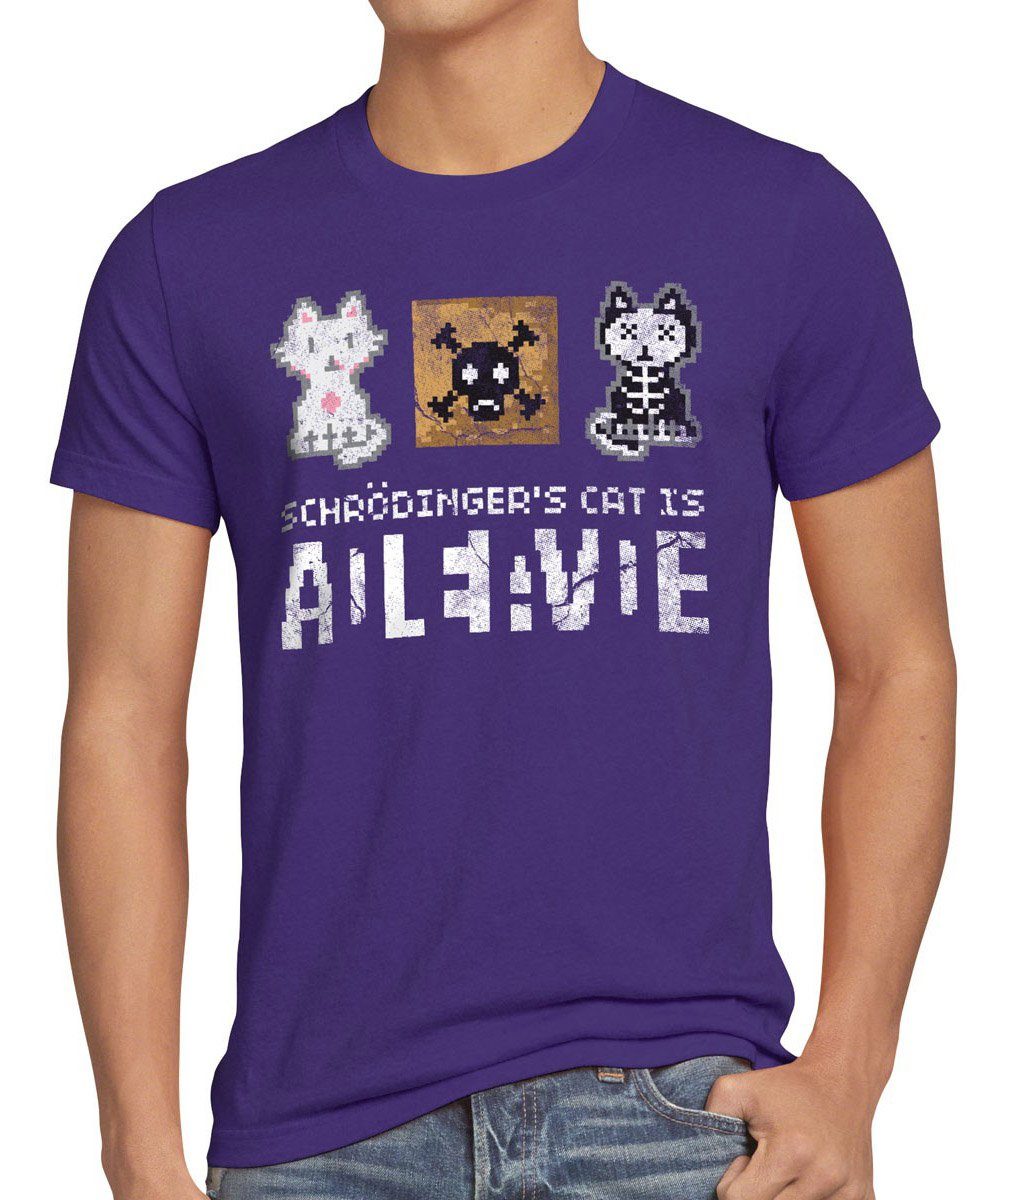 big Print-Shirt lila cat T-Shirt Schrödingers Herren schroedinger sheldon bang Katze style3 8Bit cooper